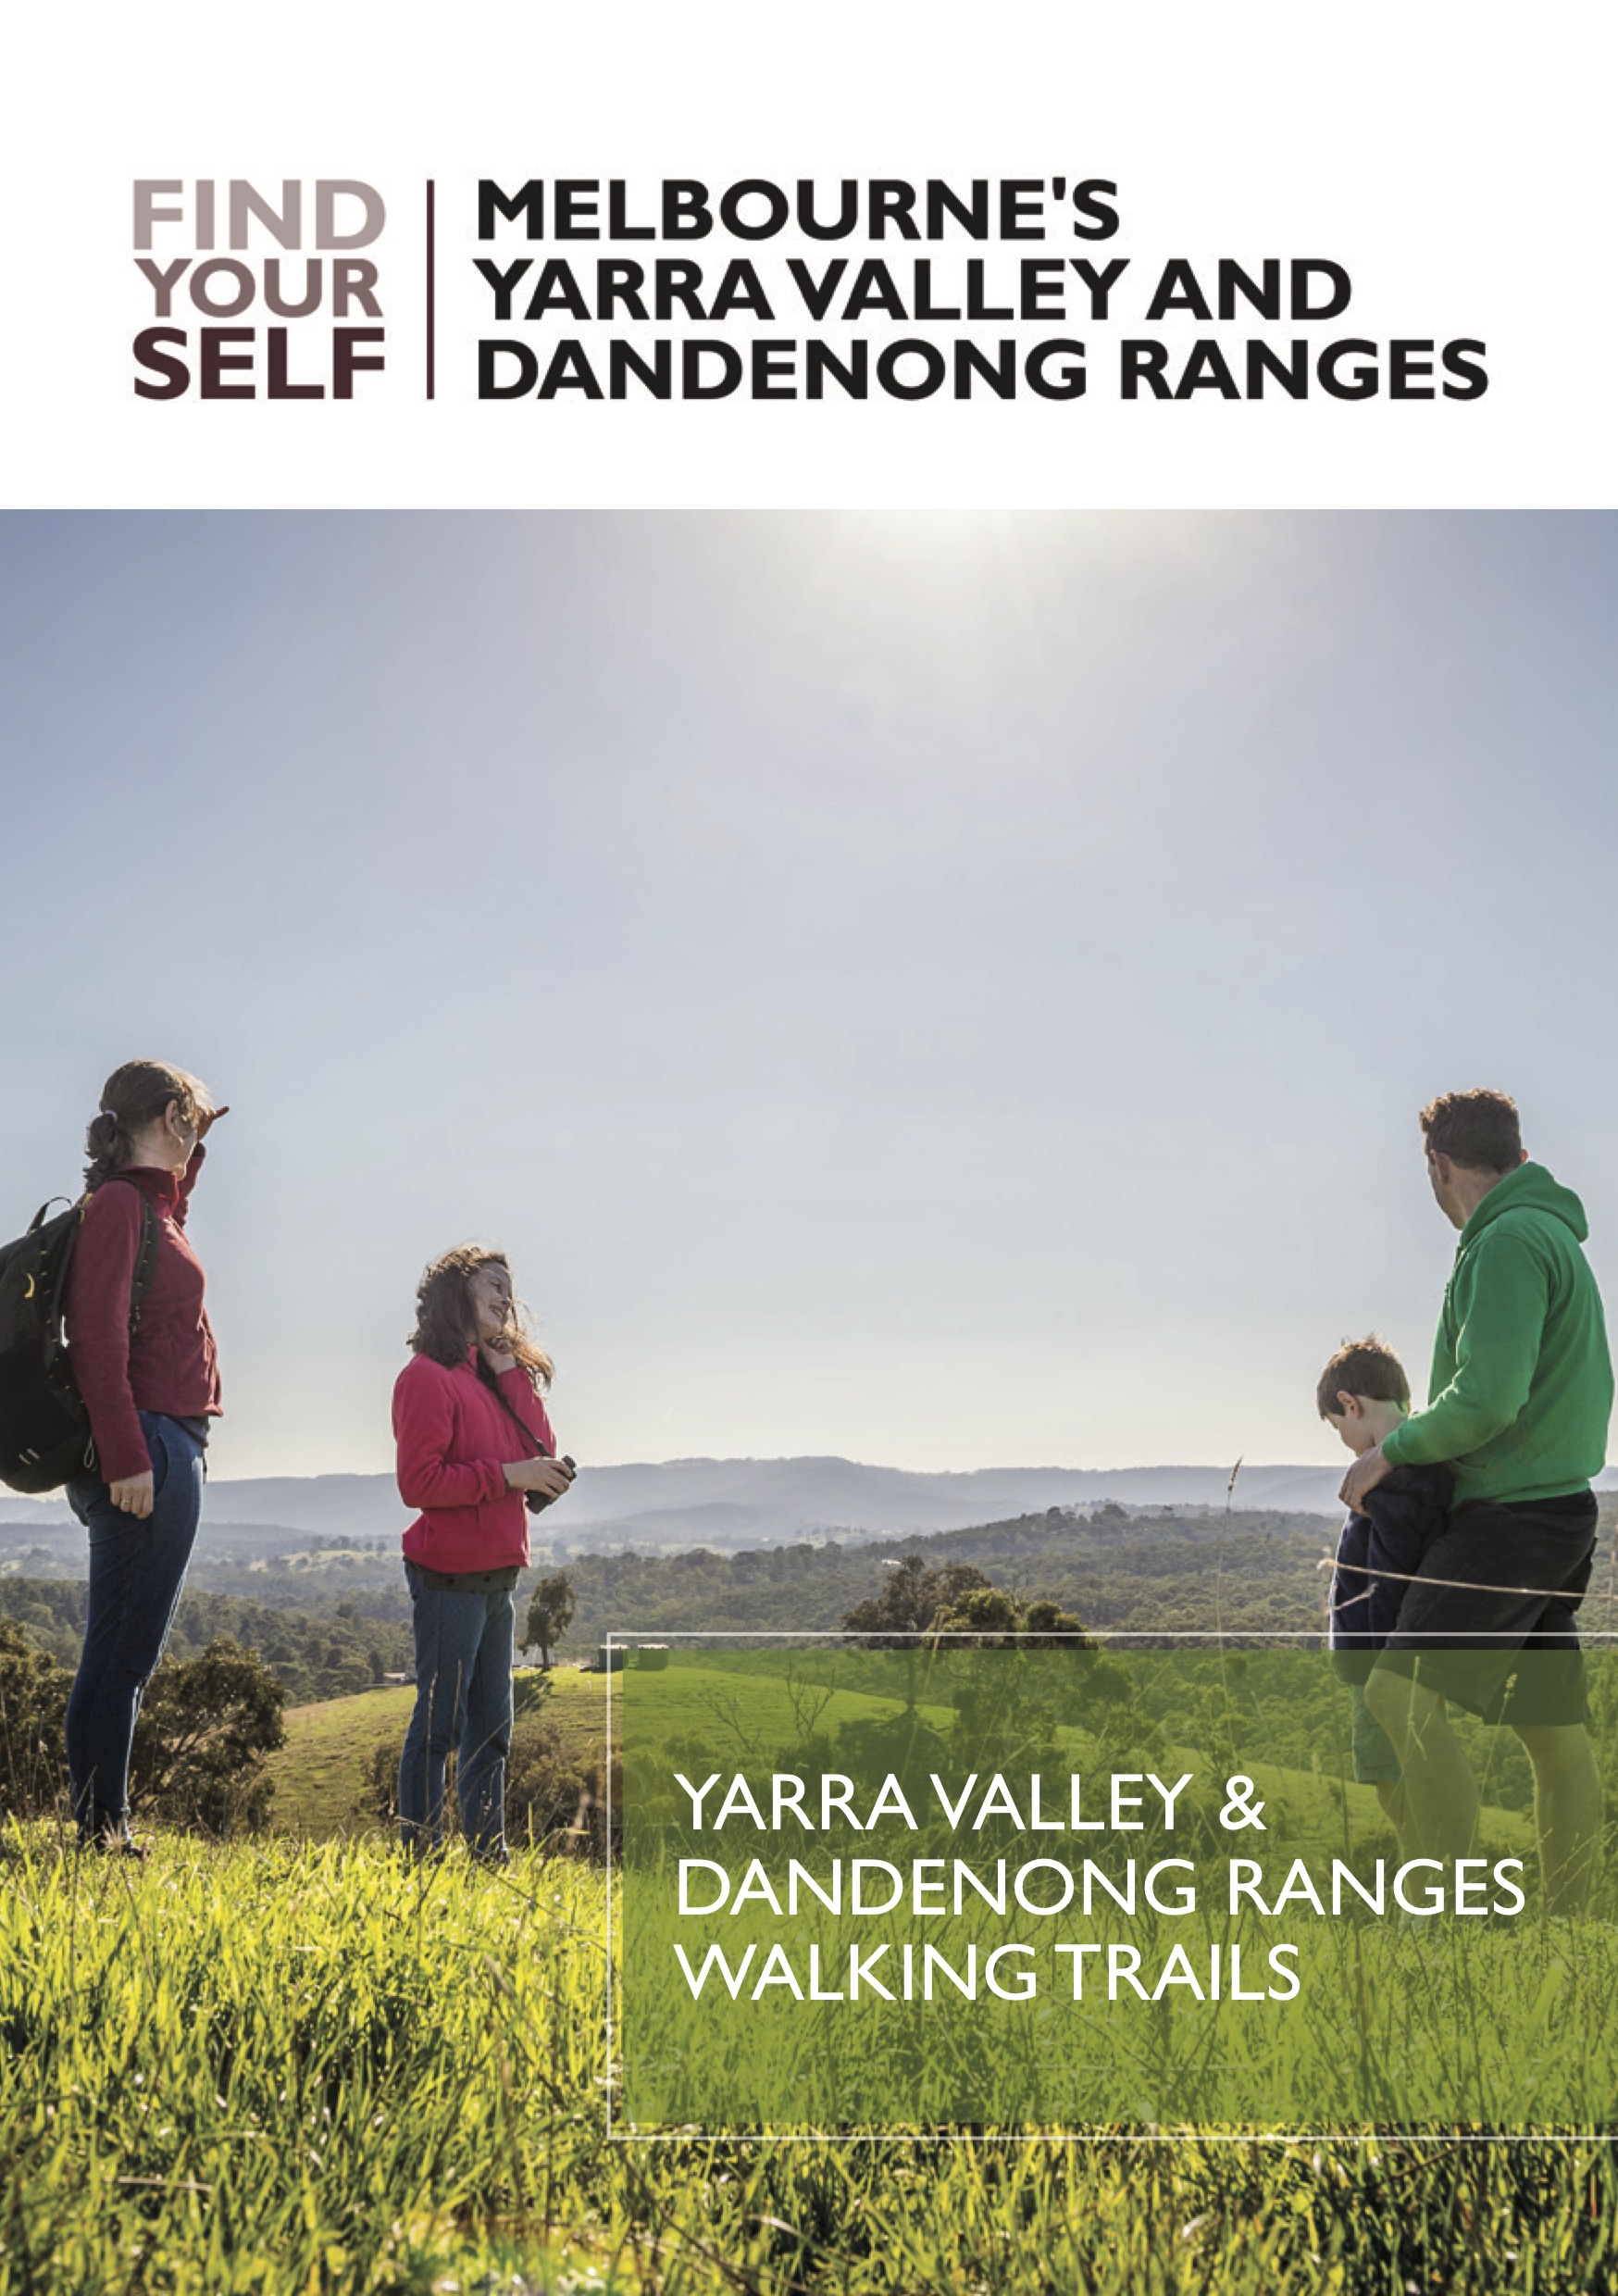 Walks eGuide of the Yarra Valley & Dandenong Ranges